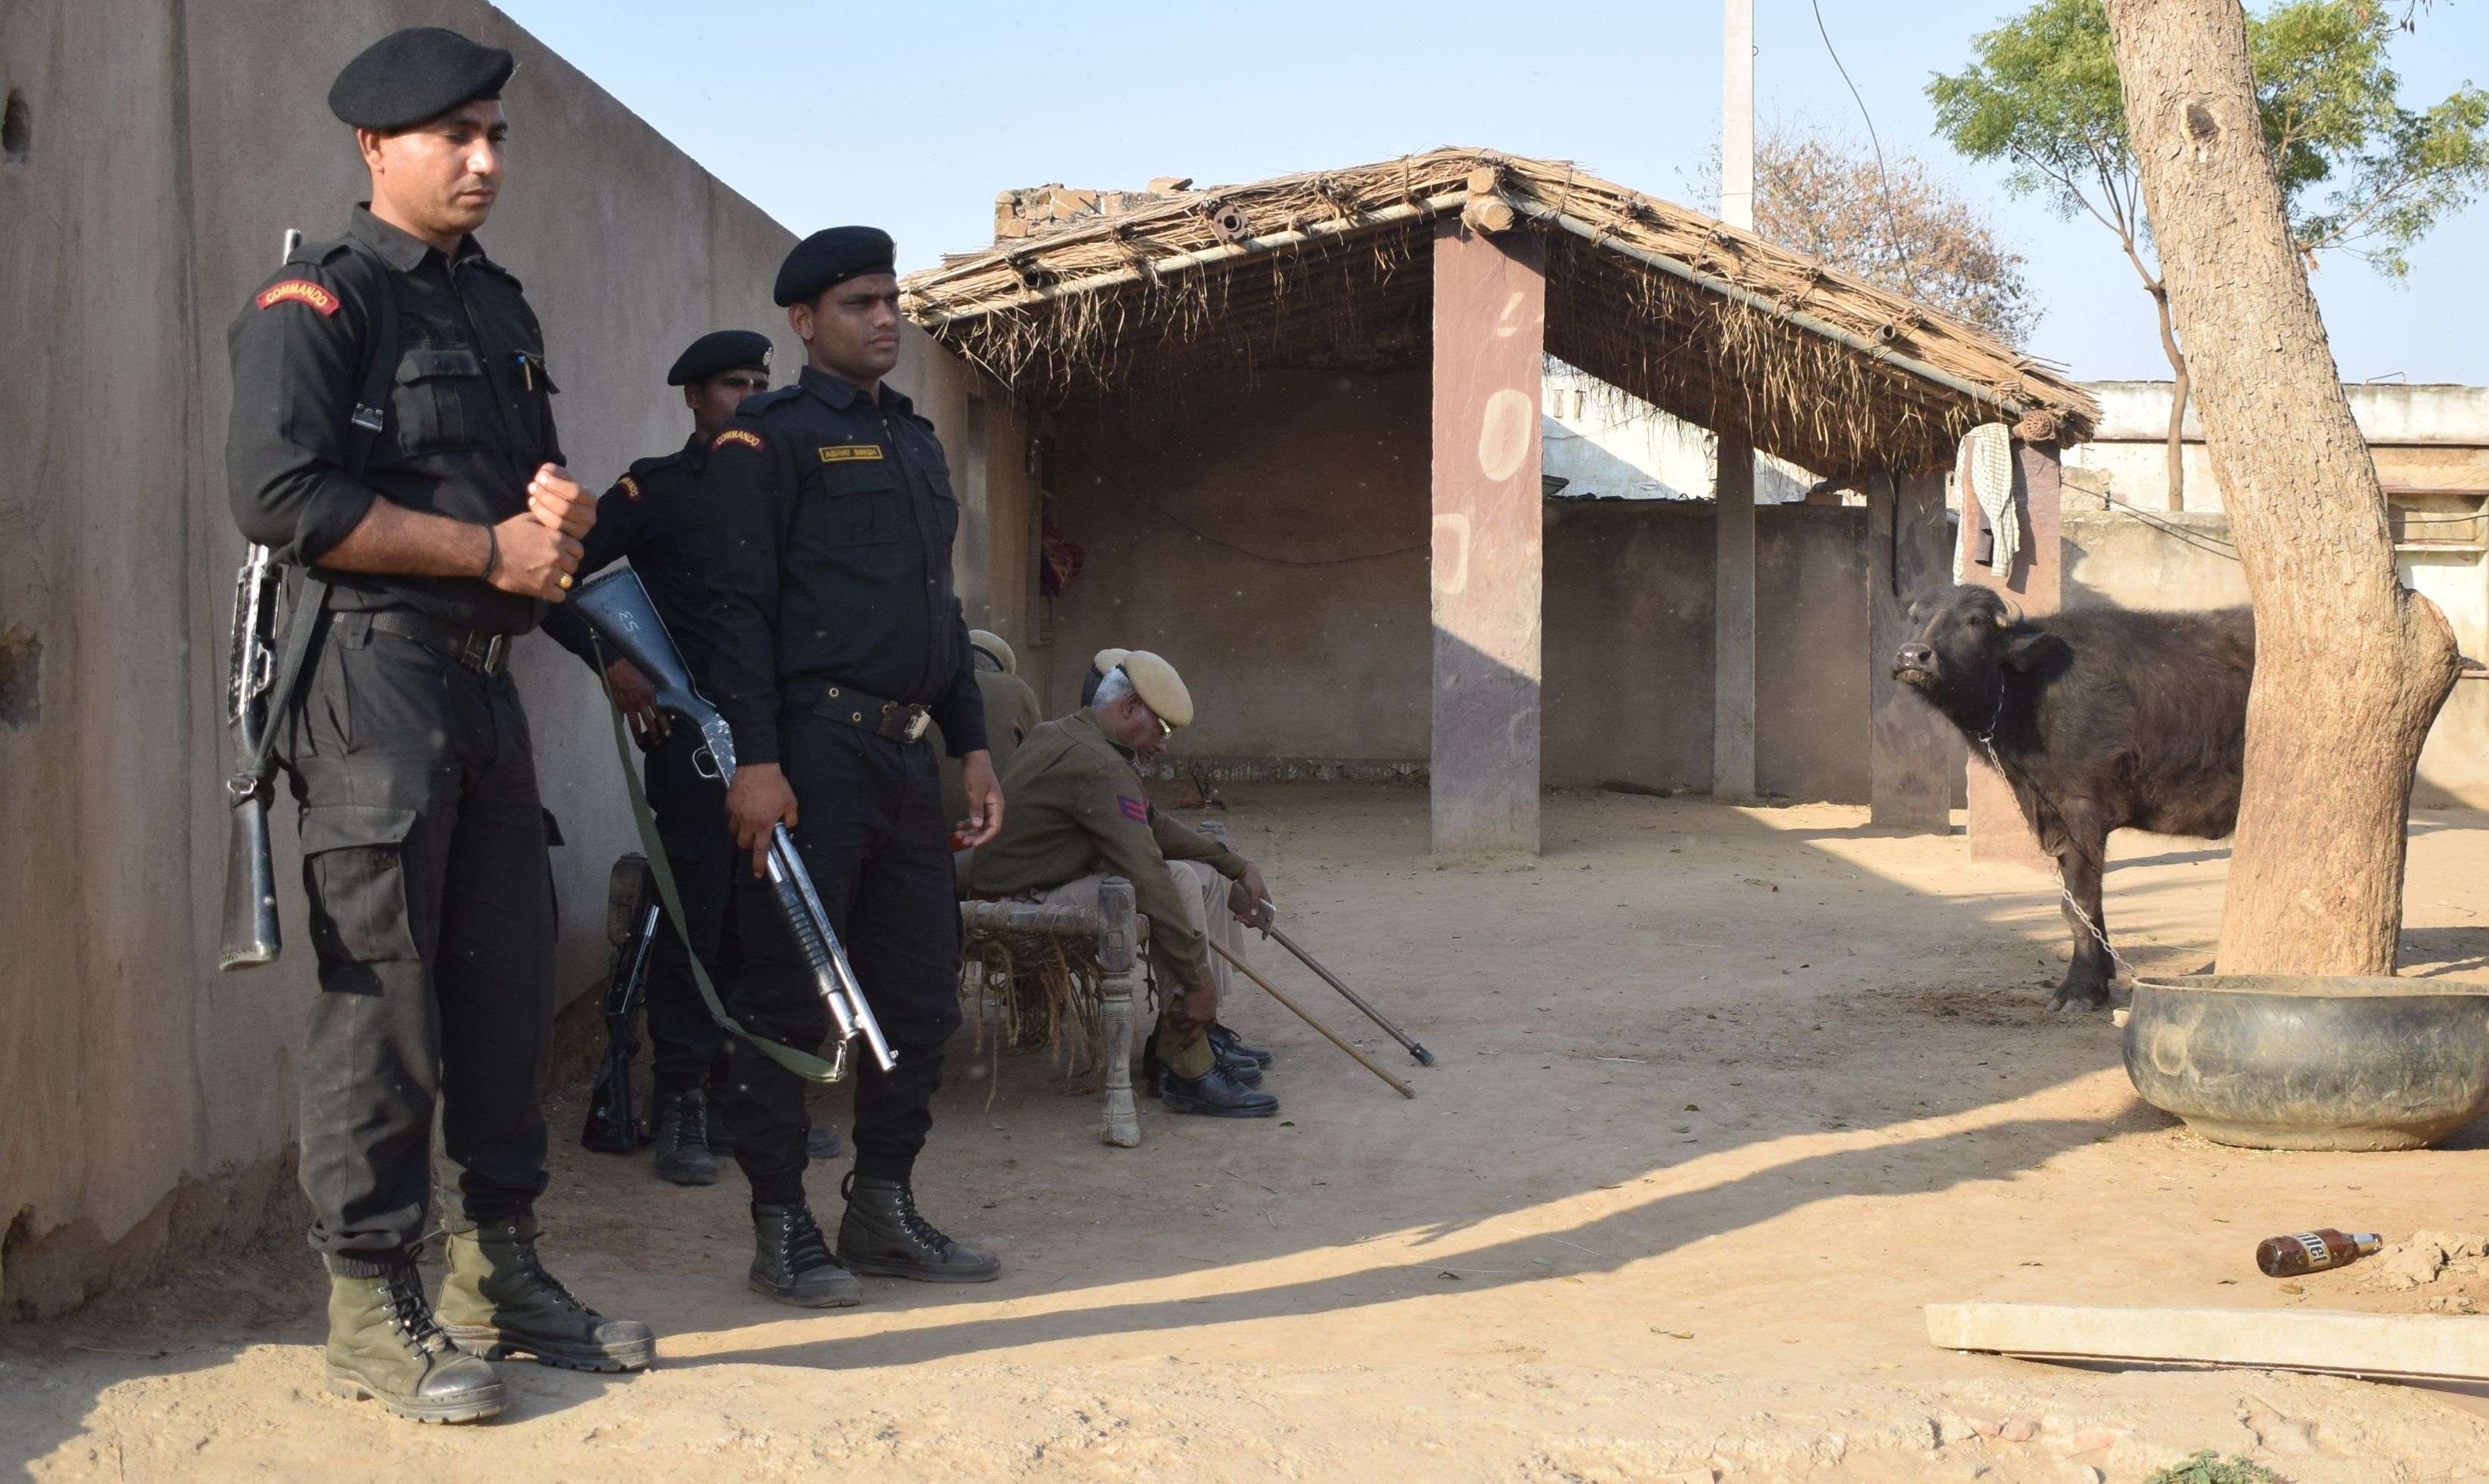 Malakhera Muder Case : Police In Village After Murder Of Three People